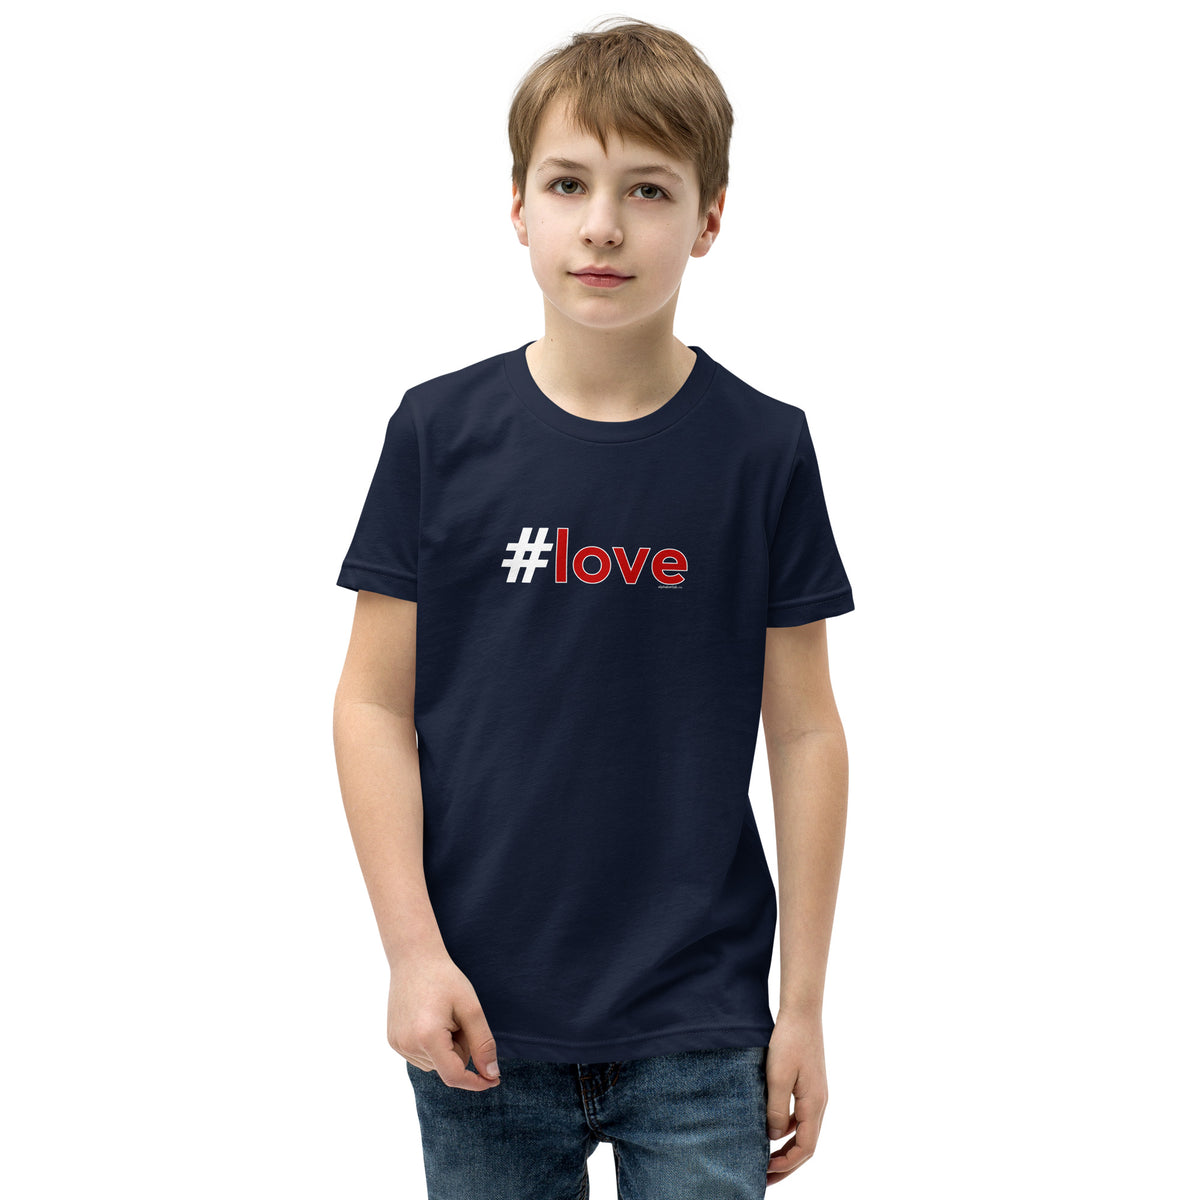 Hashtag Love Red Kids Valentine’s Day T-Shirt